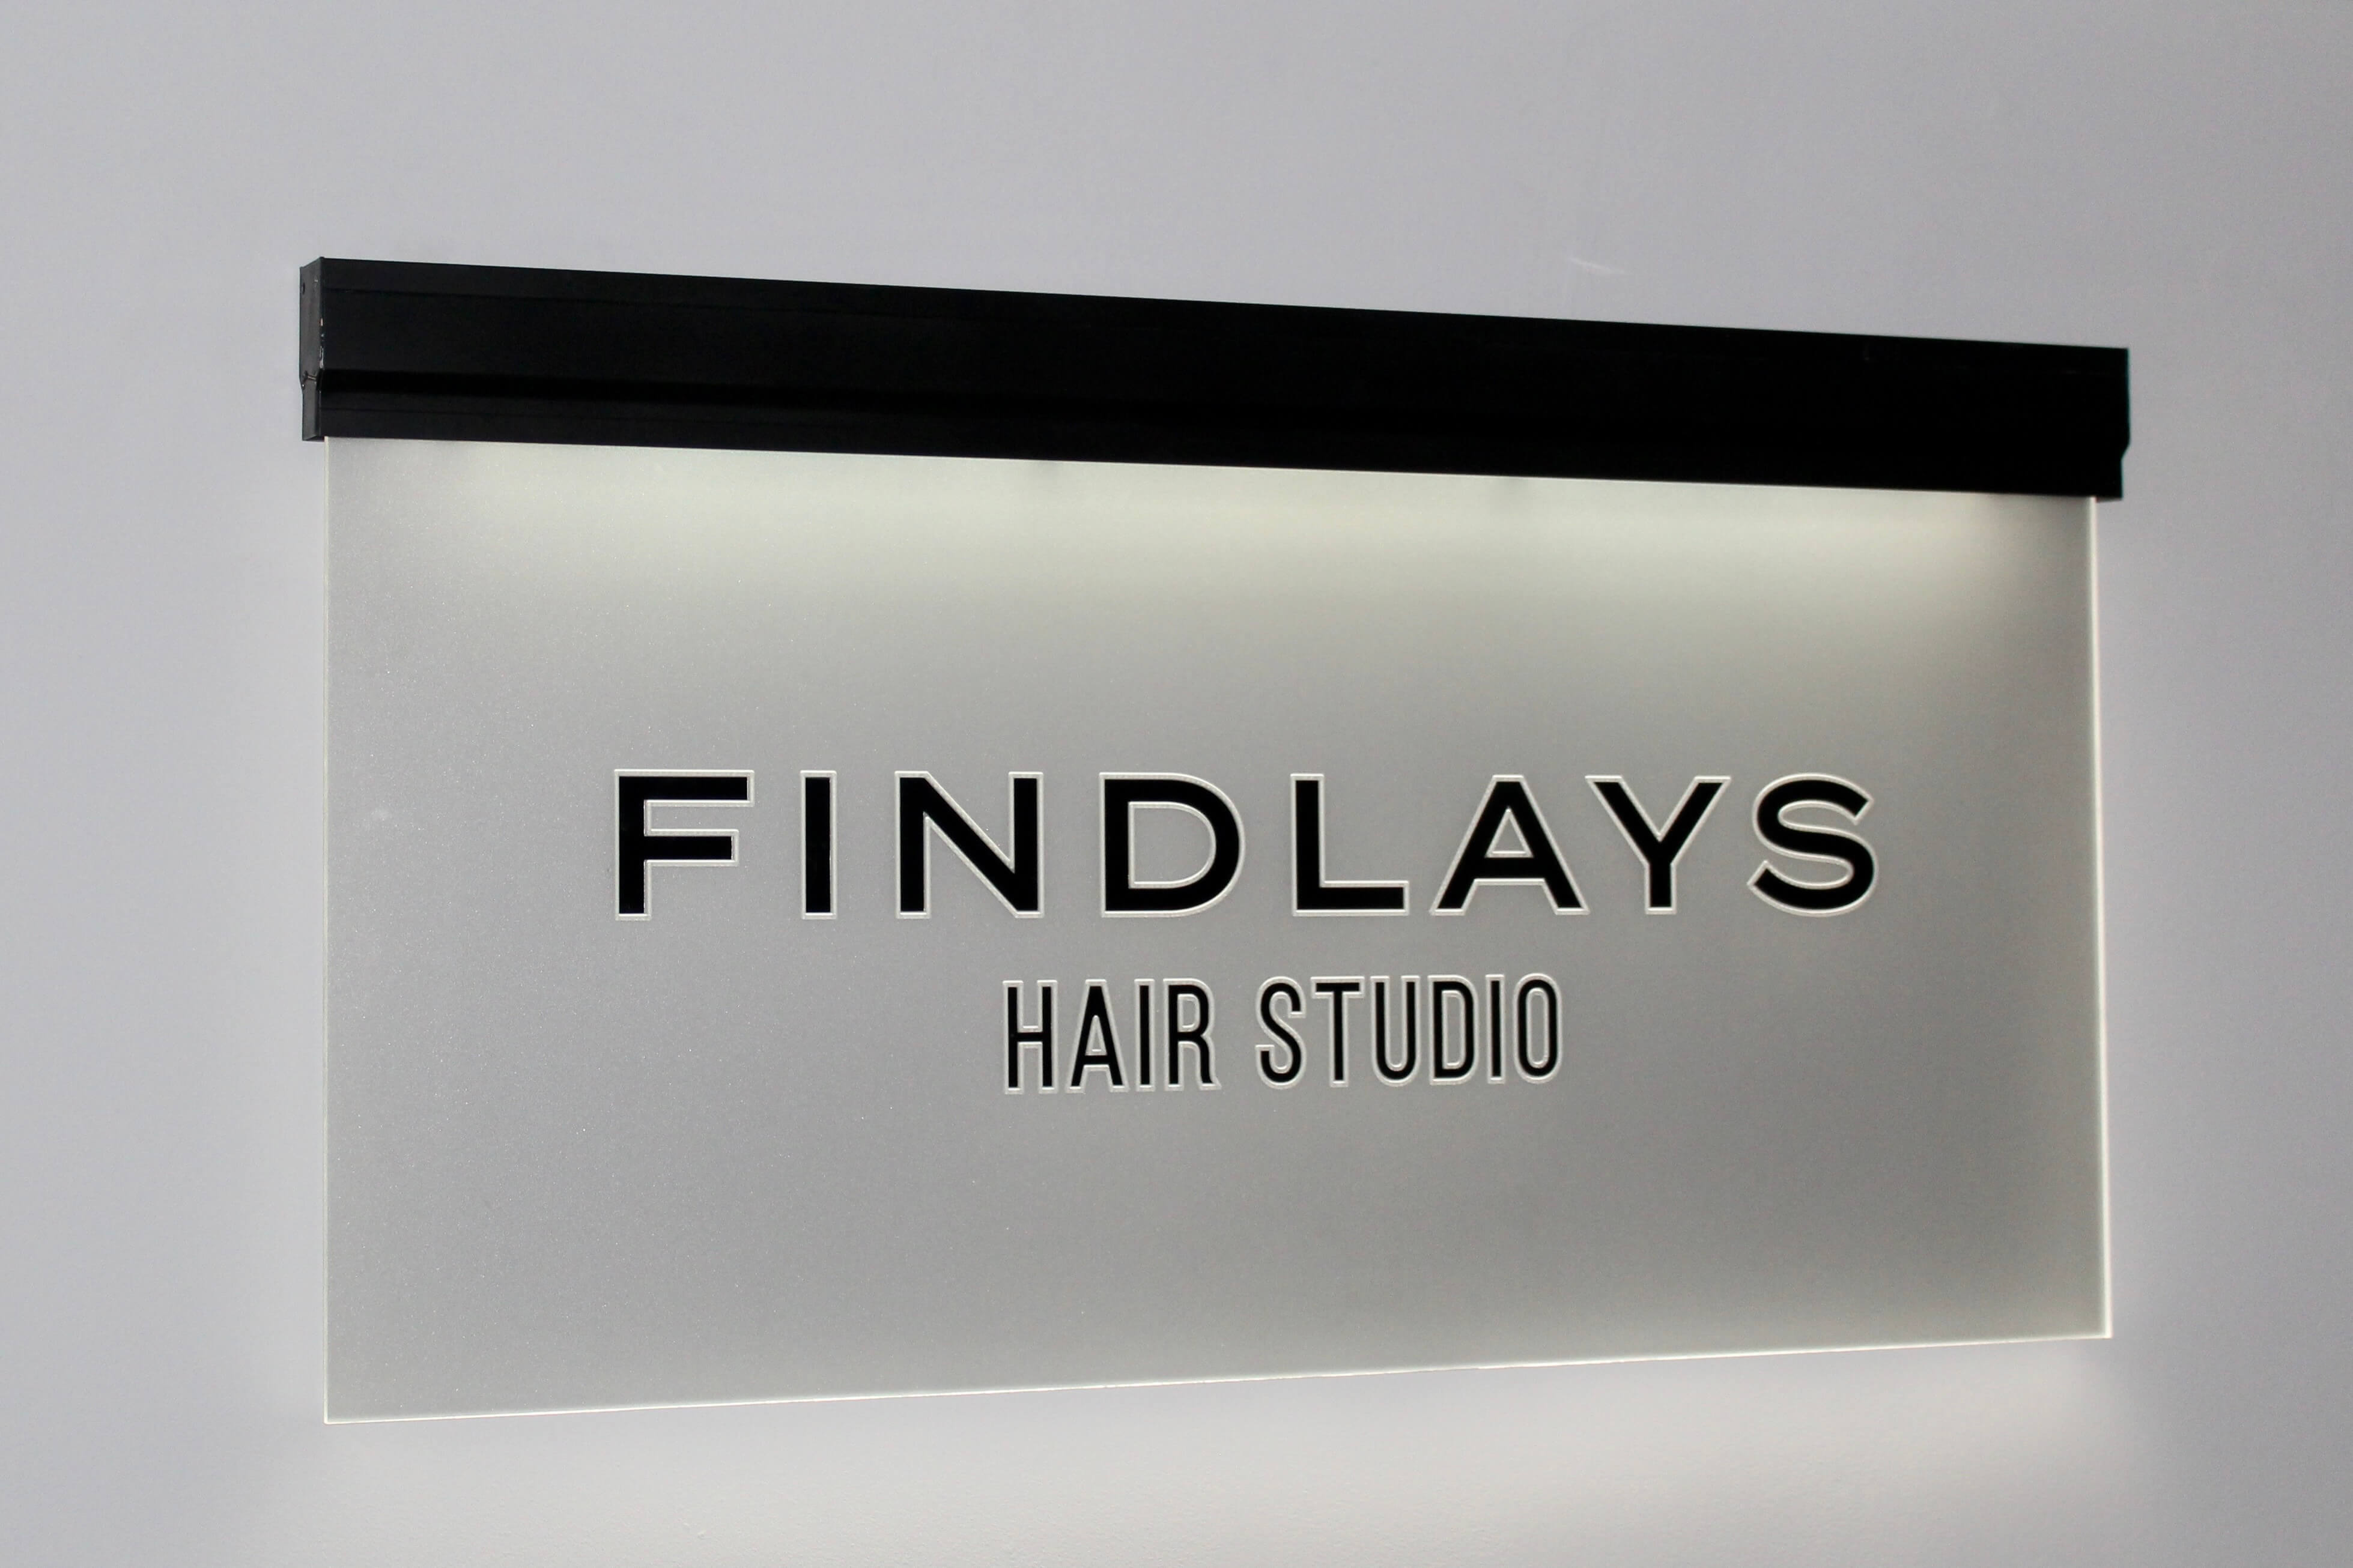 Inside Findlays Hair Studio